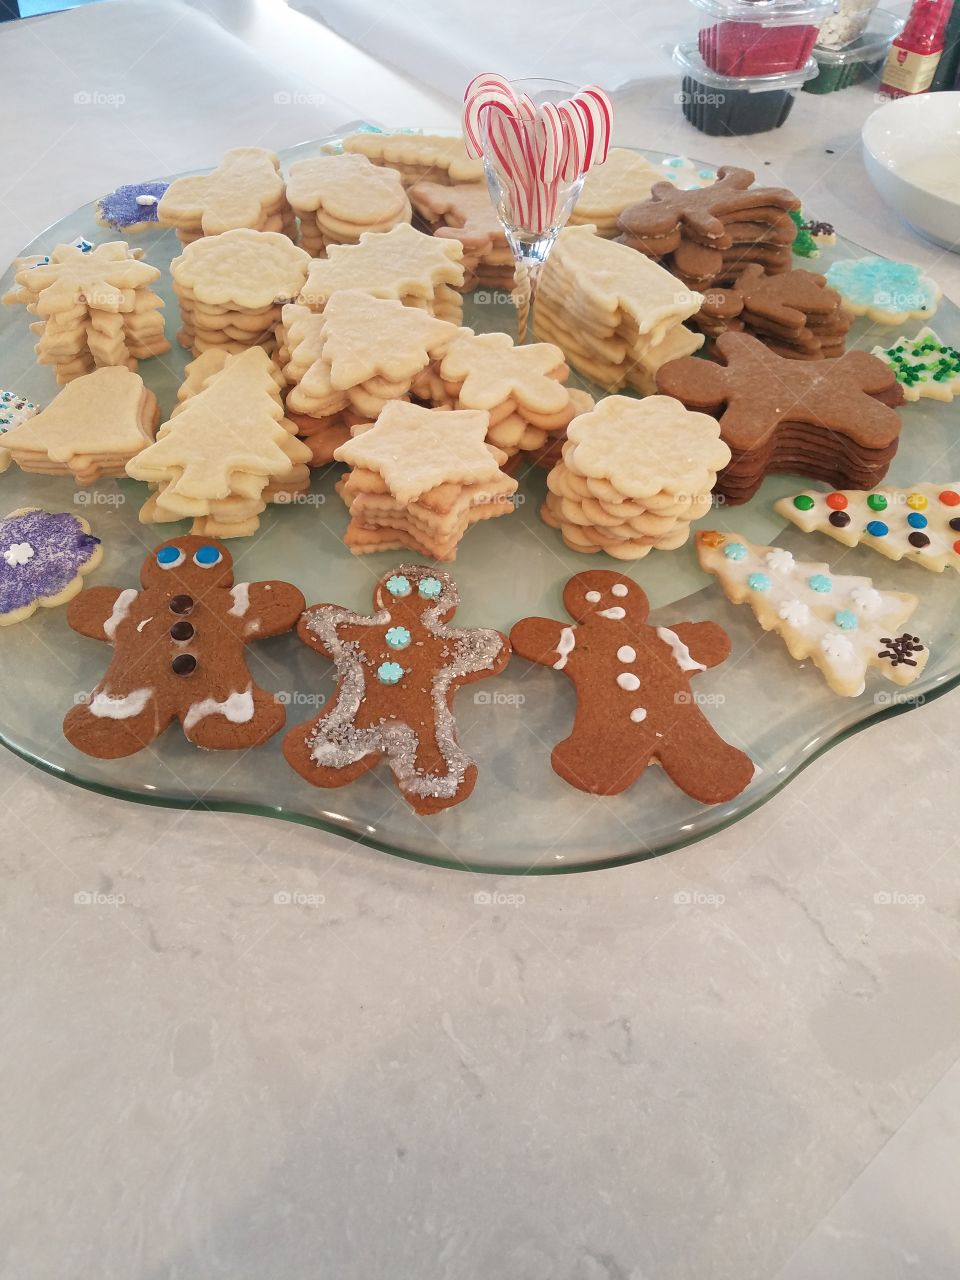 Homemade holiday cookies